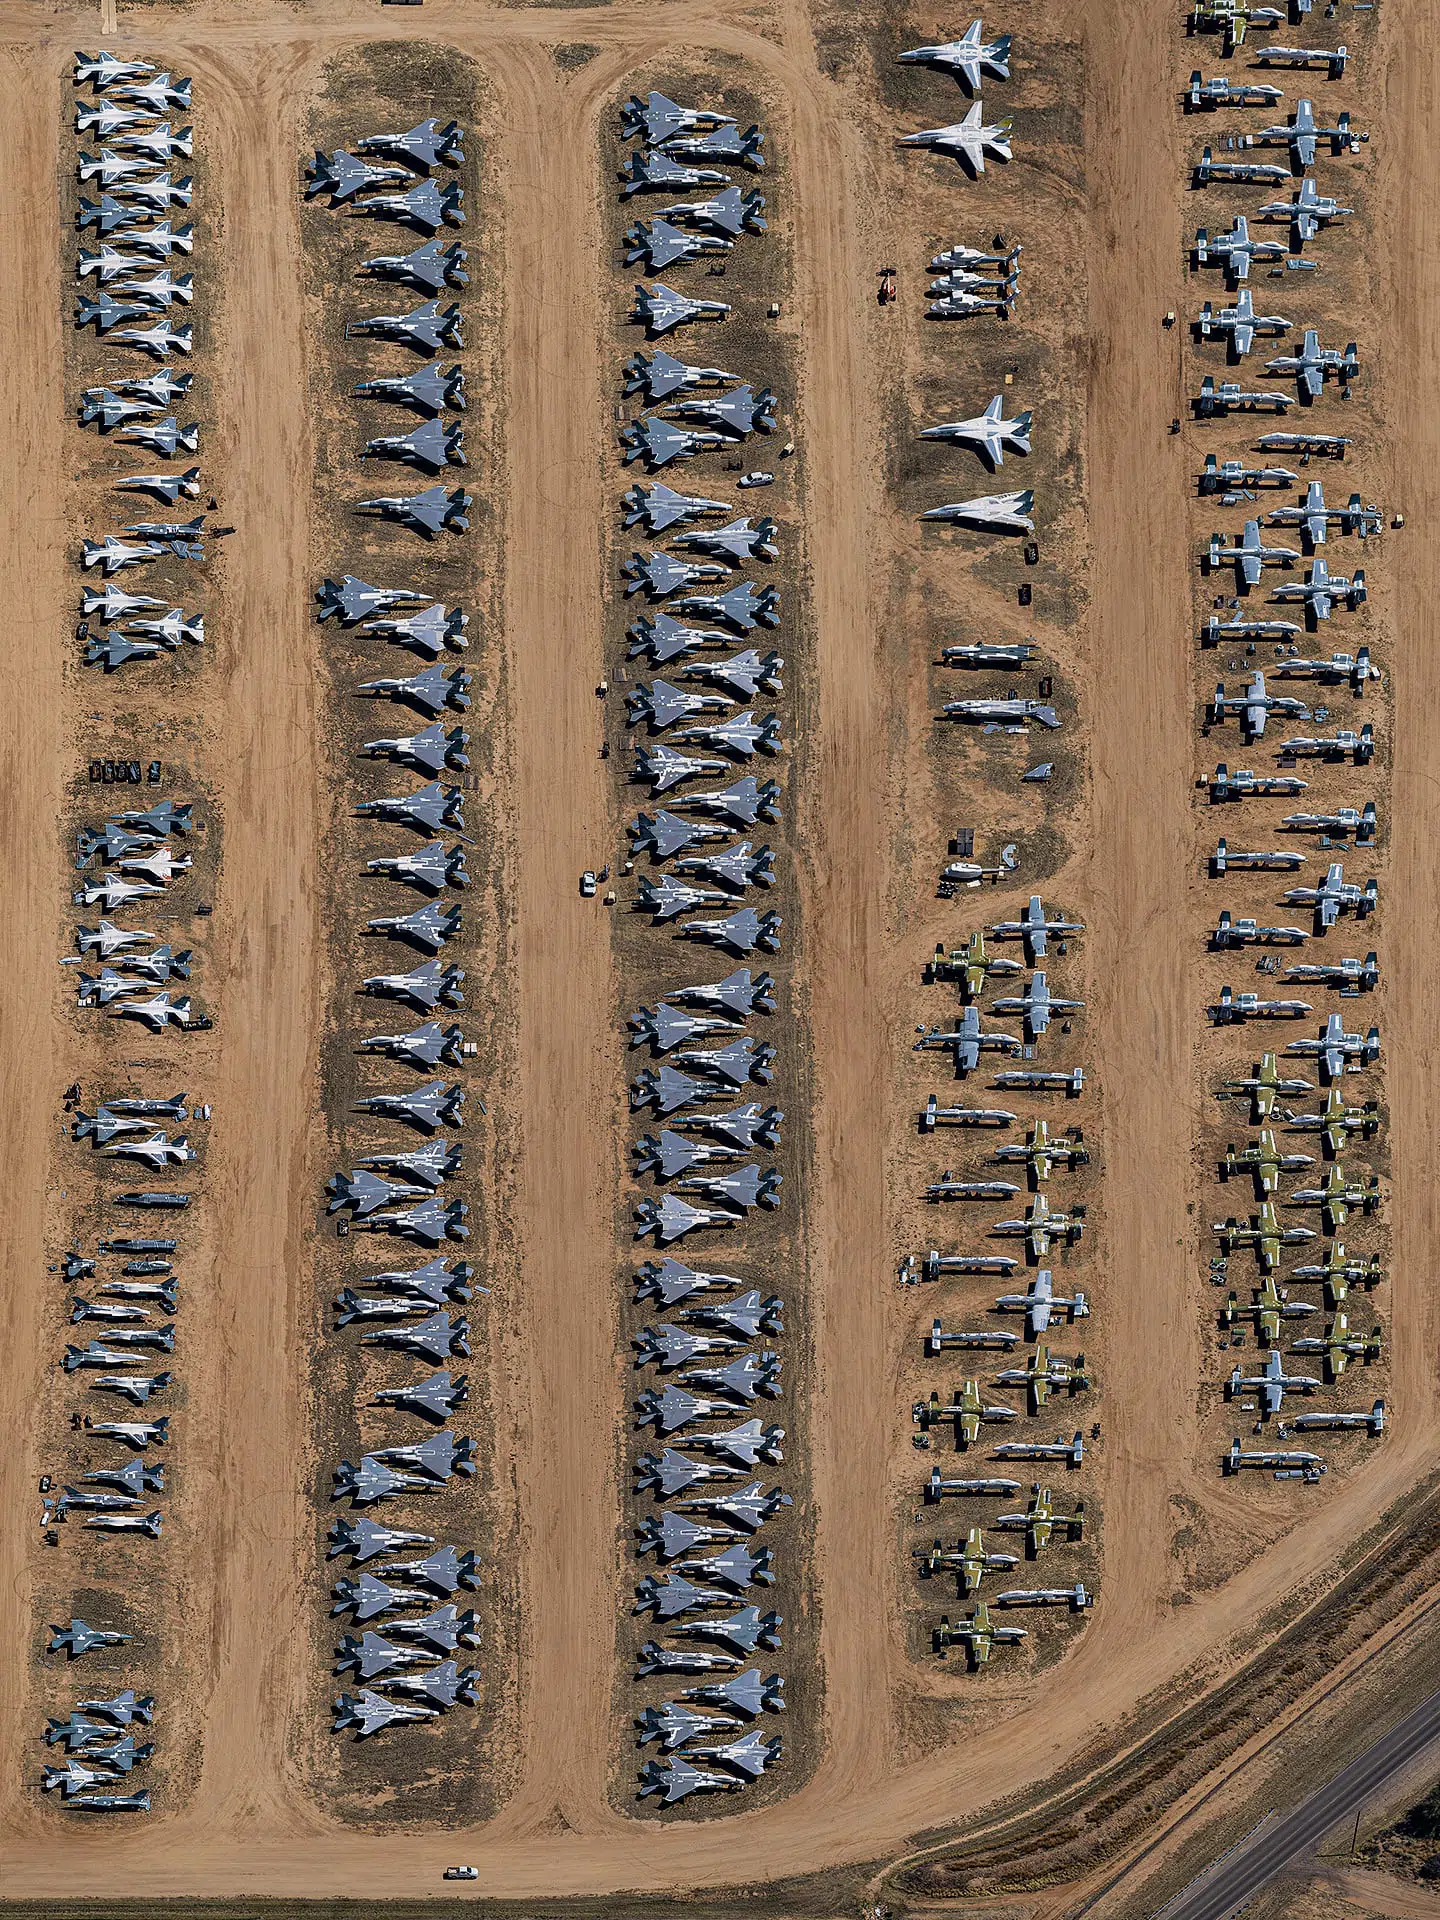 Bernhard Lang fotogfrafia aerea cementerio de aviones geometrico